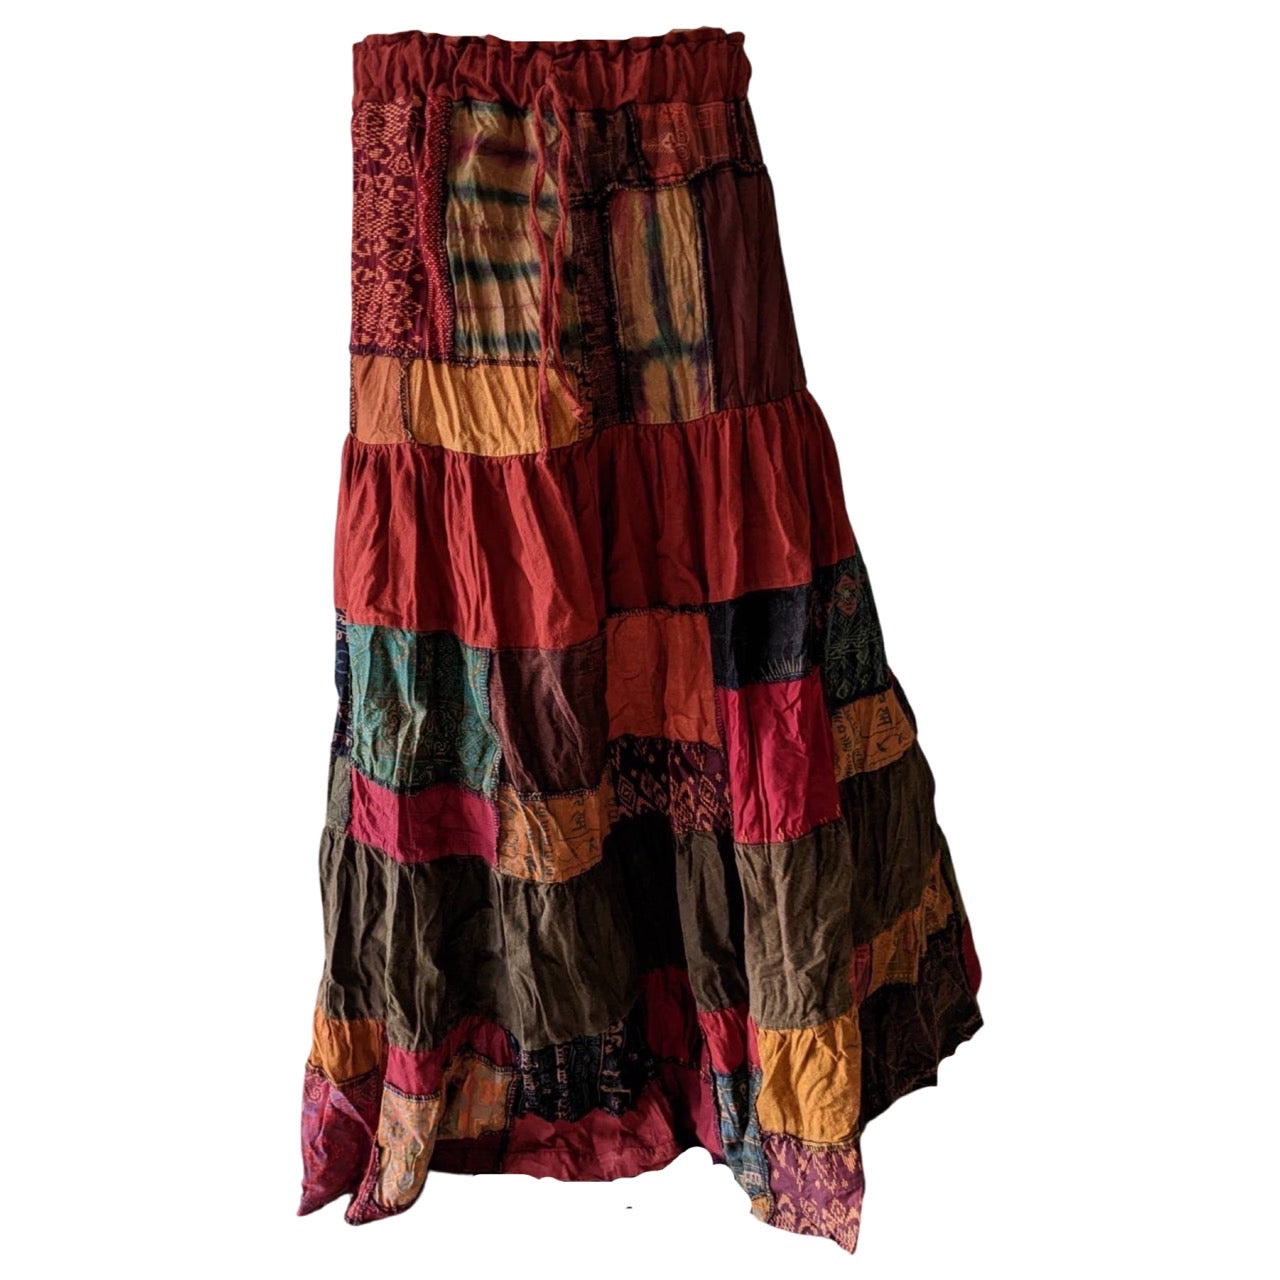 Bohemian Patchwork Skirt Assorted.